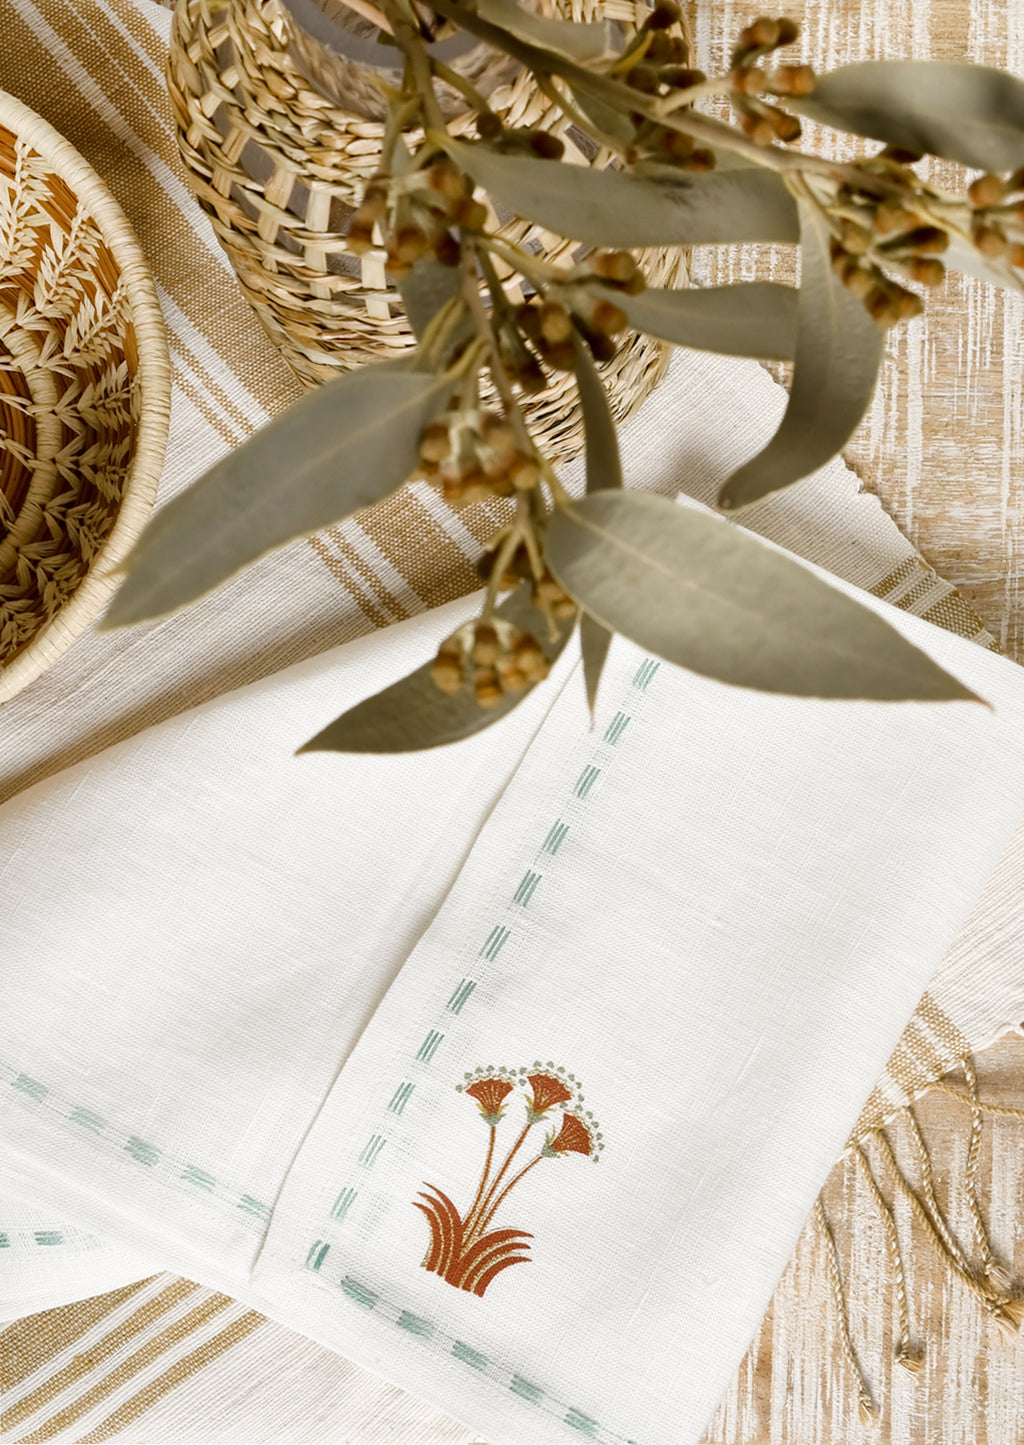 Seafoam Multi: A white linen napkin with stitched seafoam border and nile lotus emblem at corner.